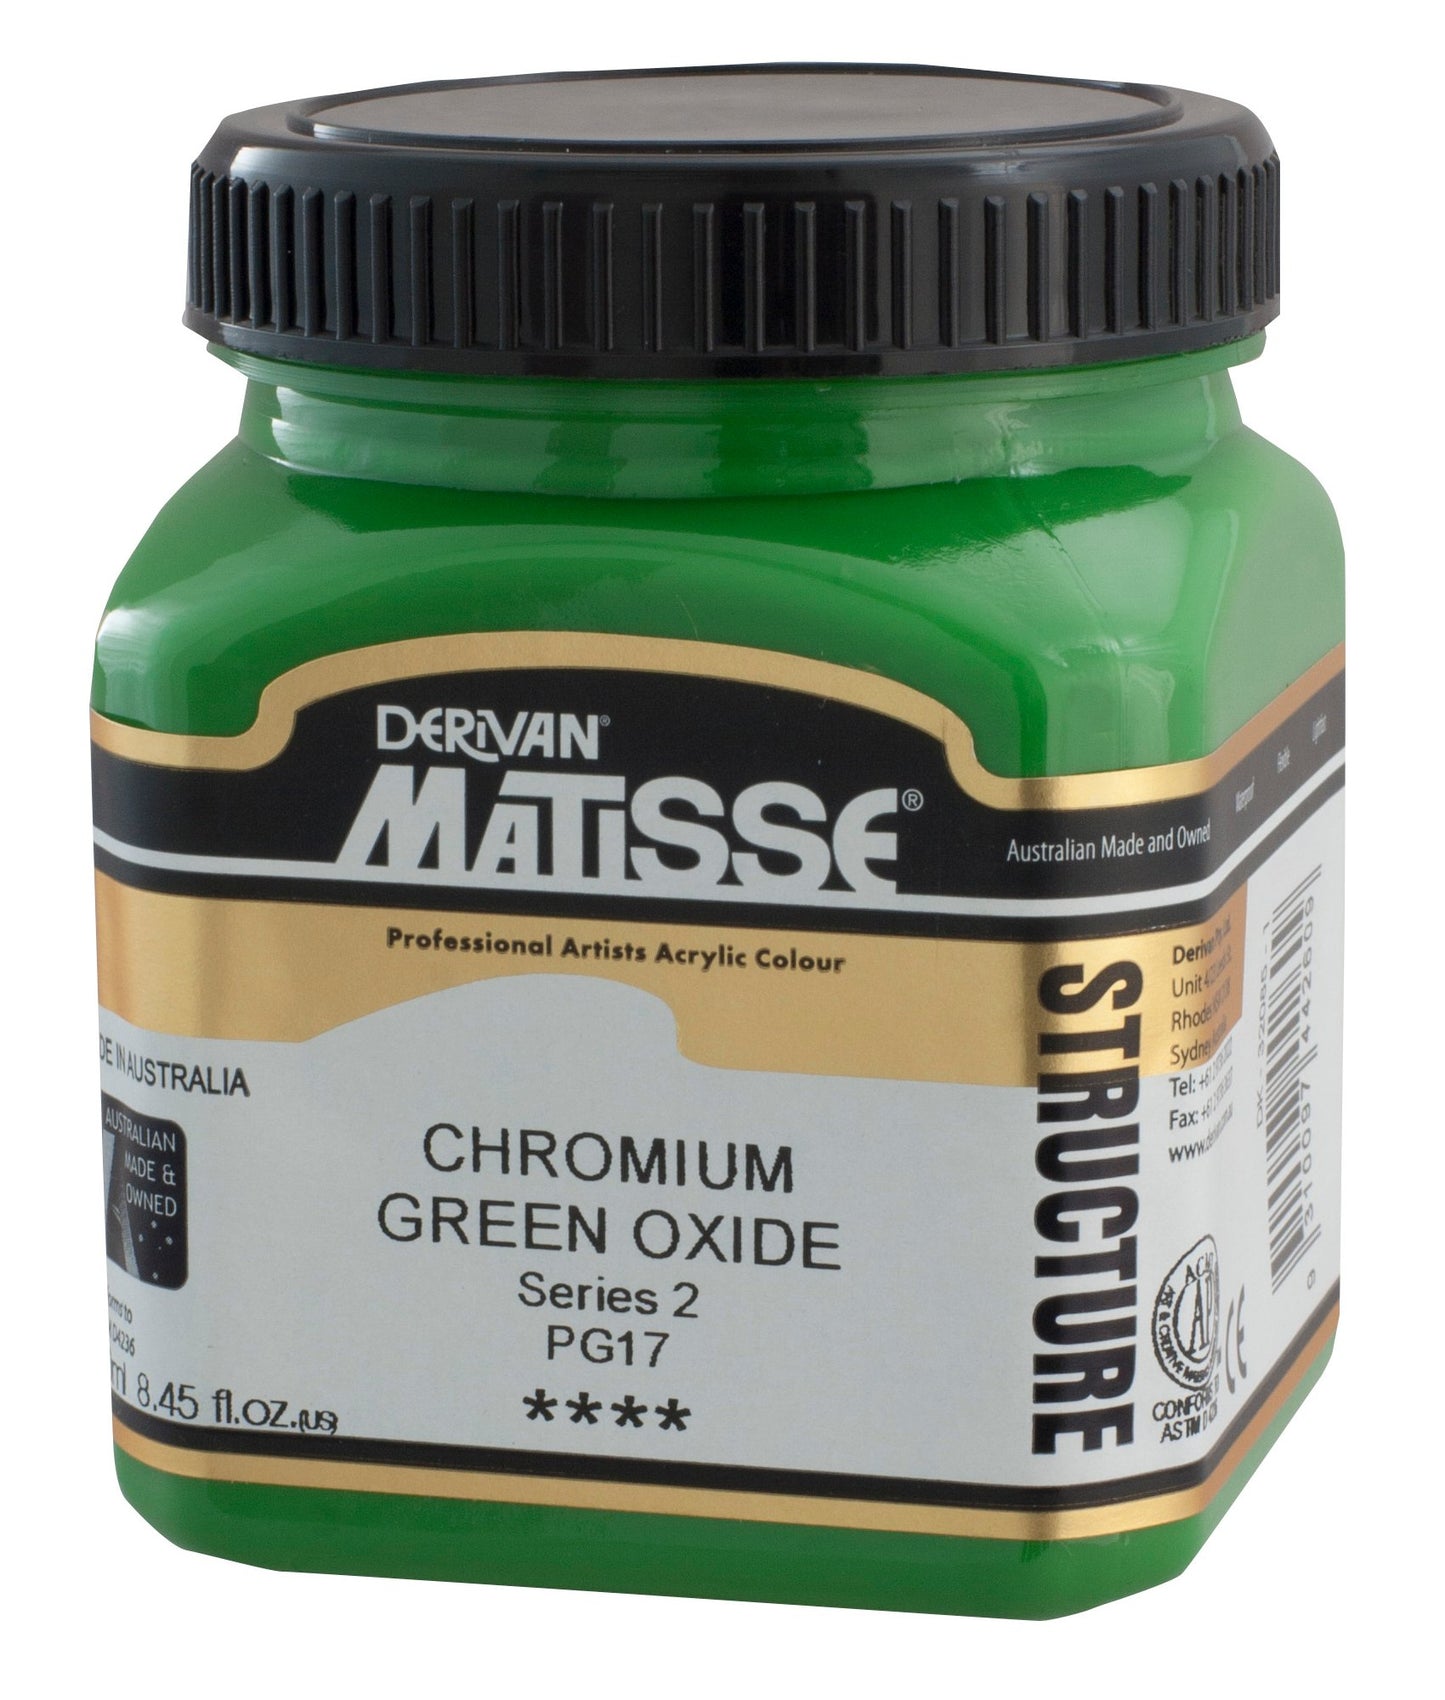 Derivan Matisse, Structure, Chromium Green Oxide